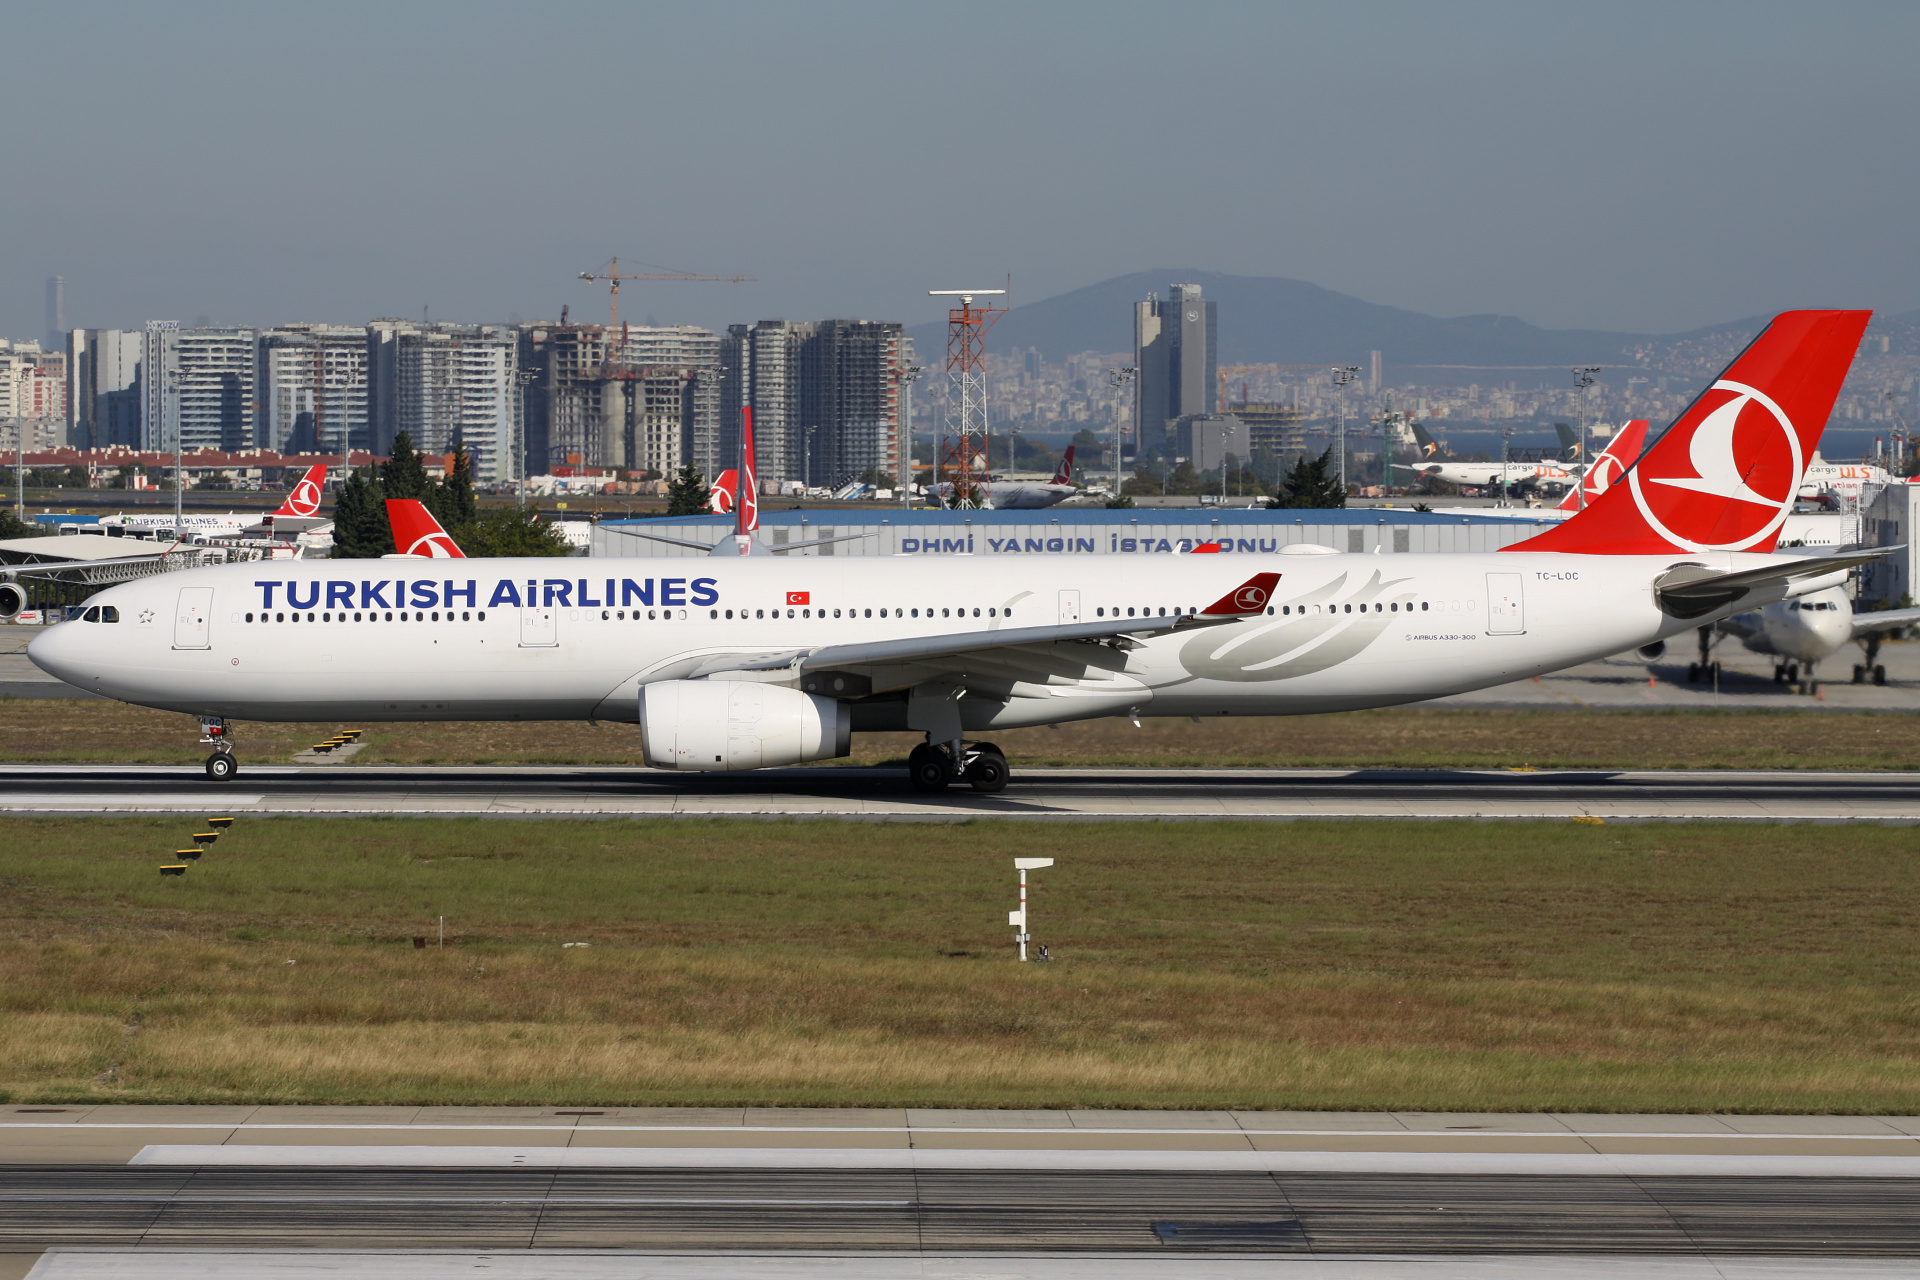 TC-LOC (Samoloty » Port Lotniczy im. Atatürka w Stambule » Airbus A330-300 » THY Turkish Airlines)